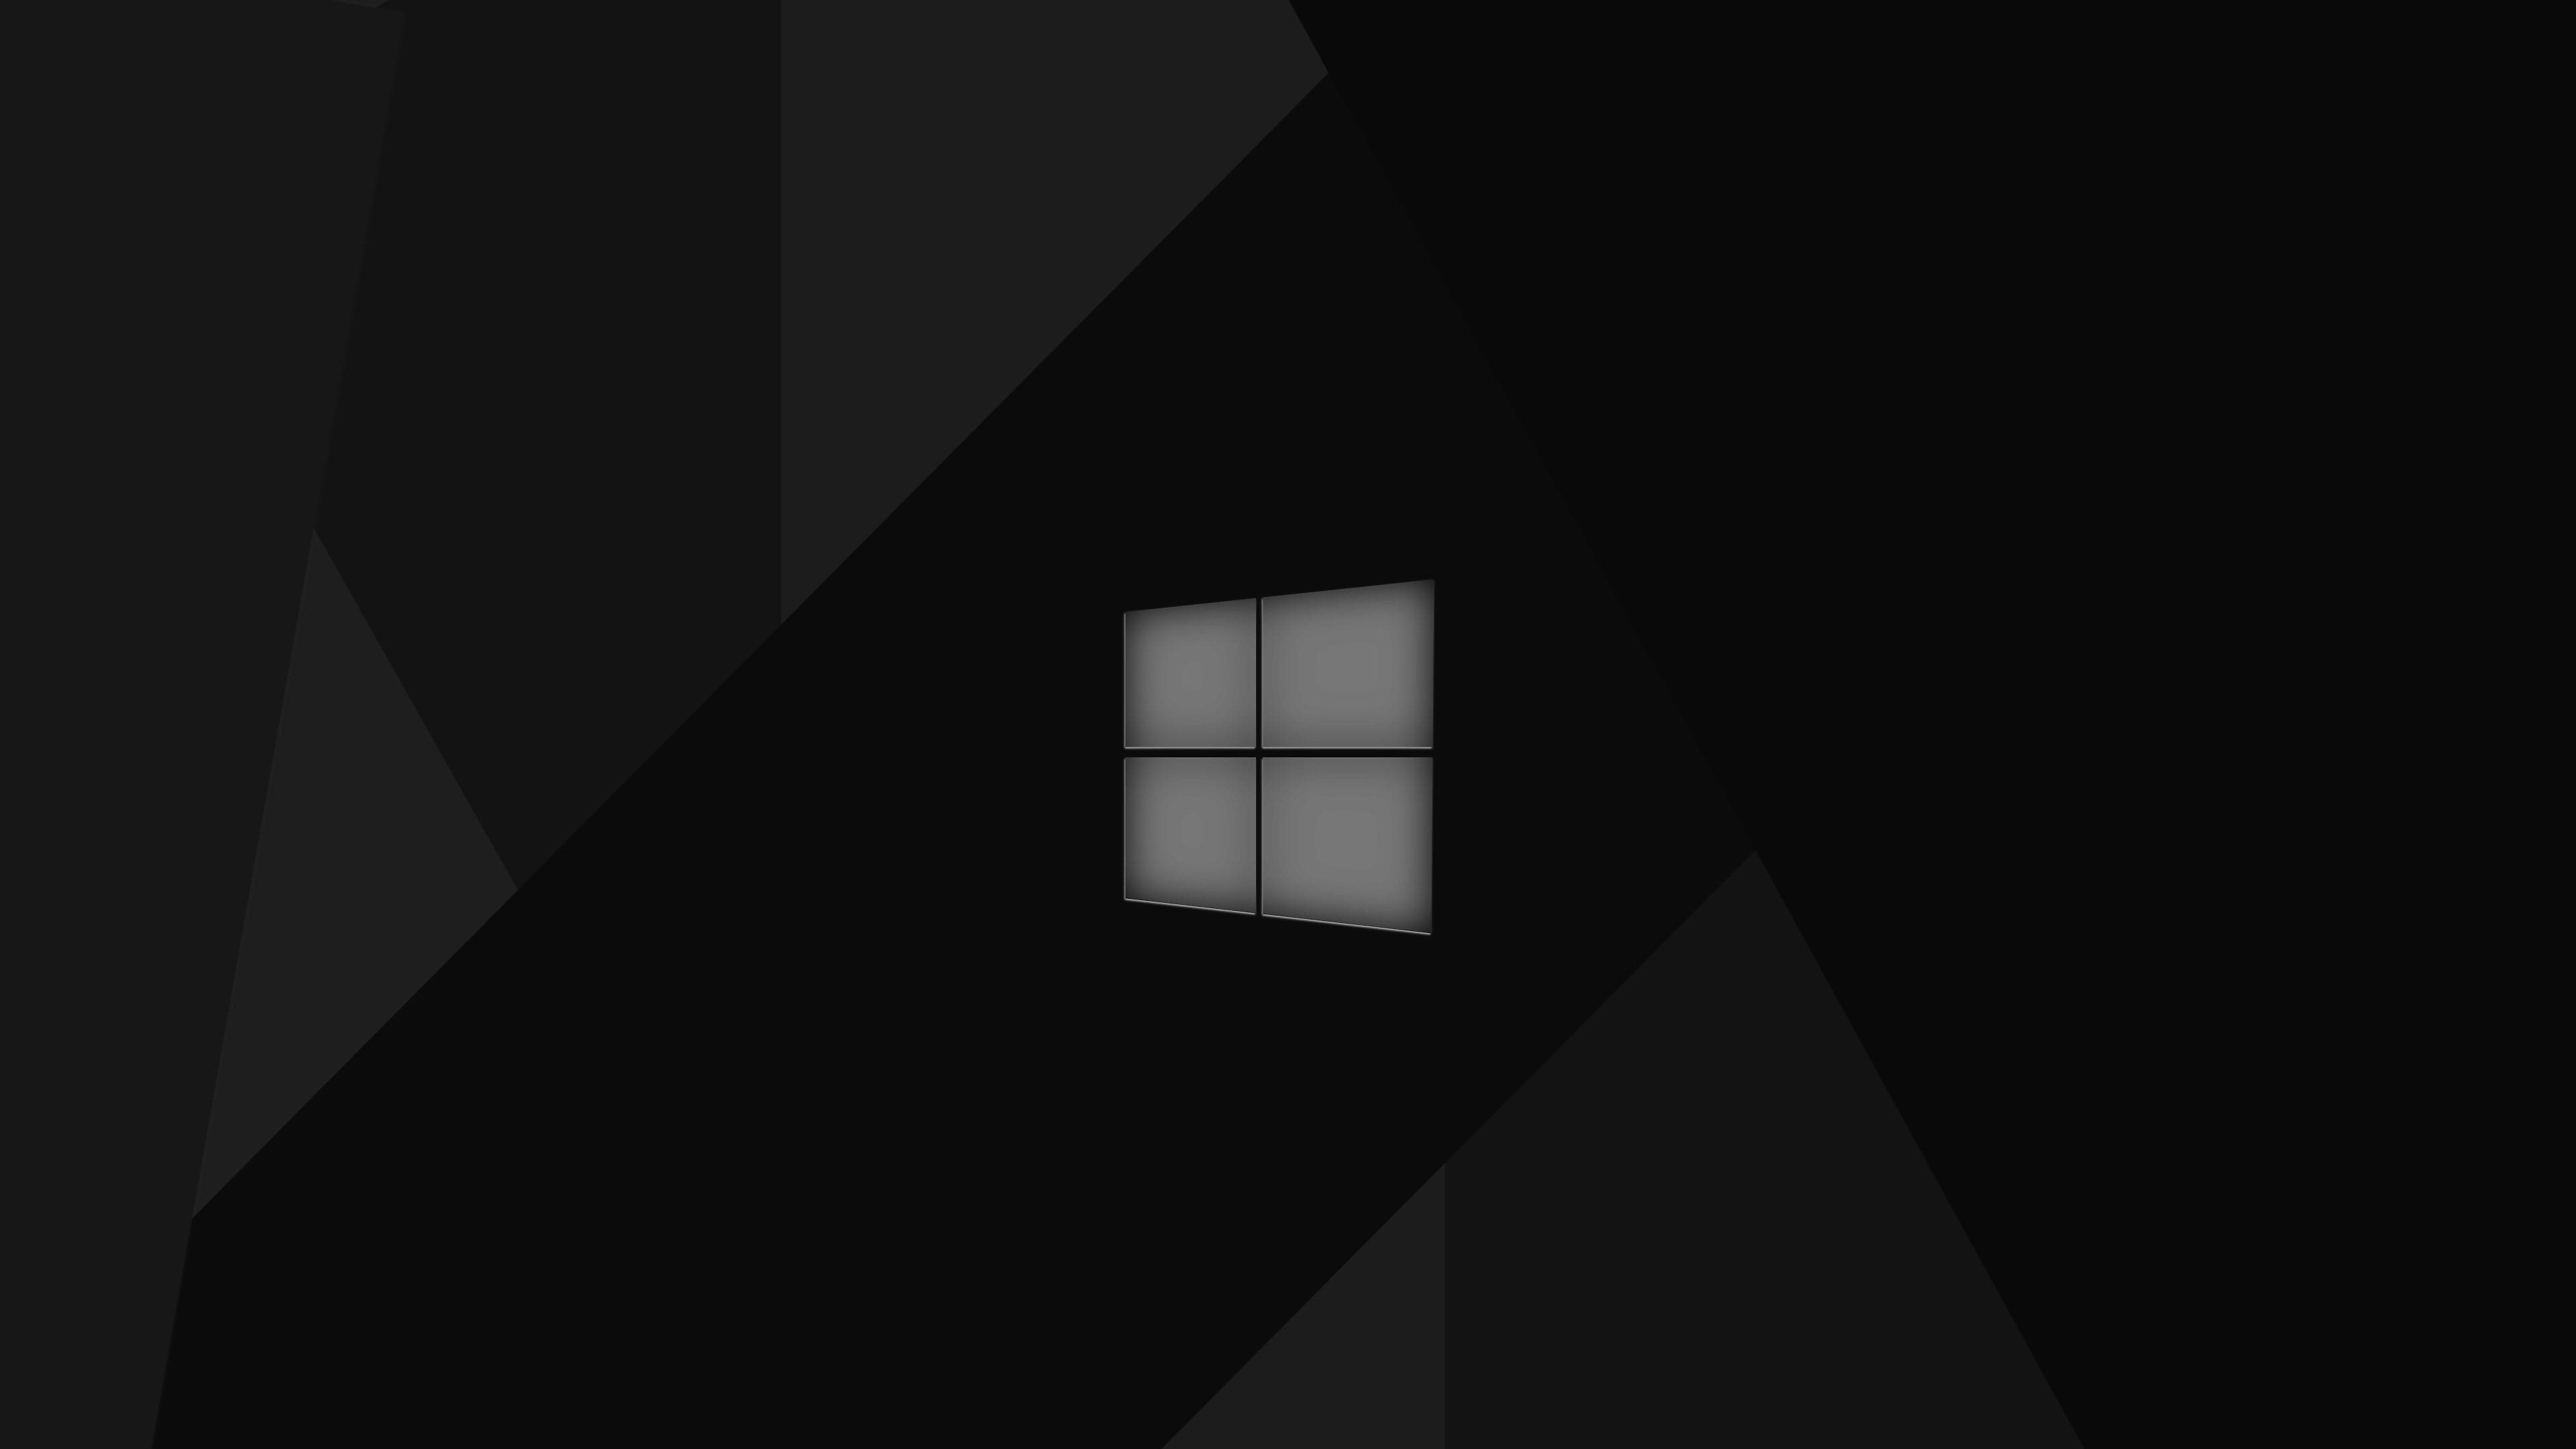 Windows 10 Material Design, architecture, dark, built structure